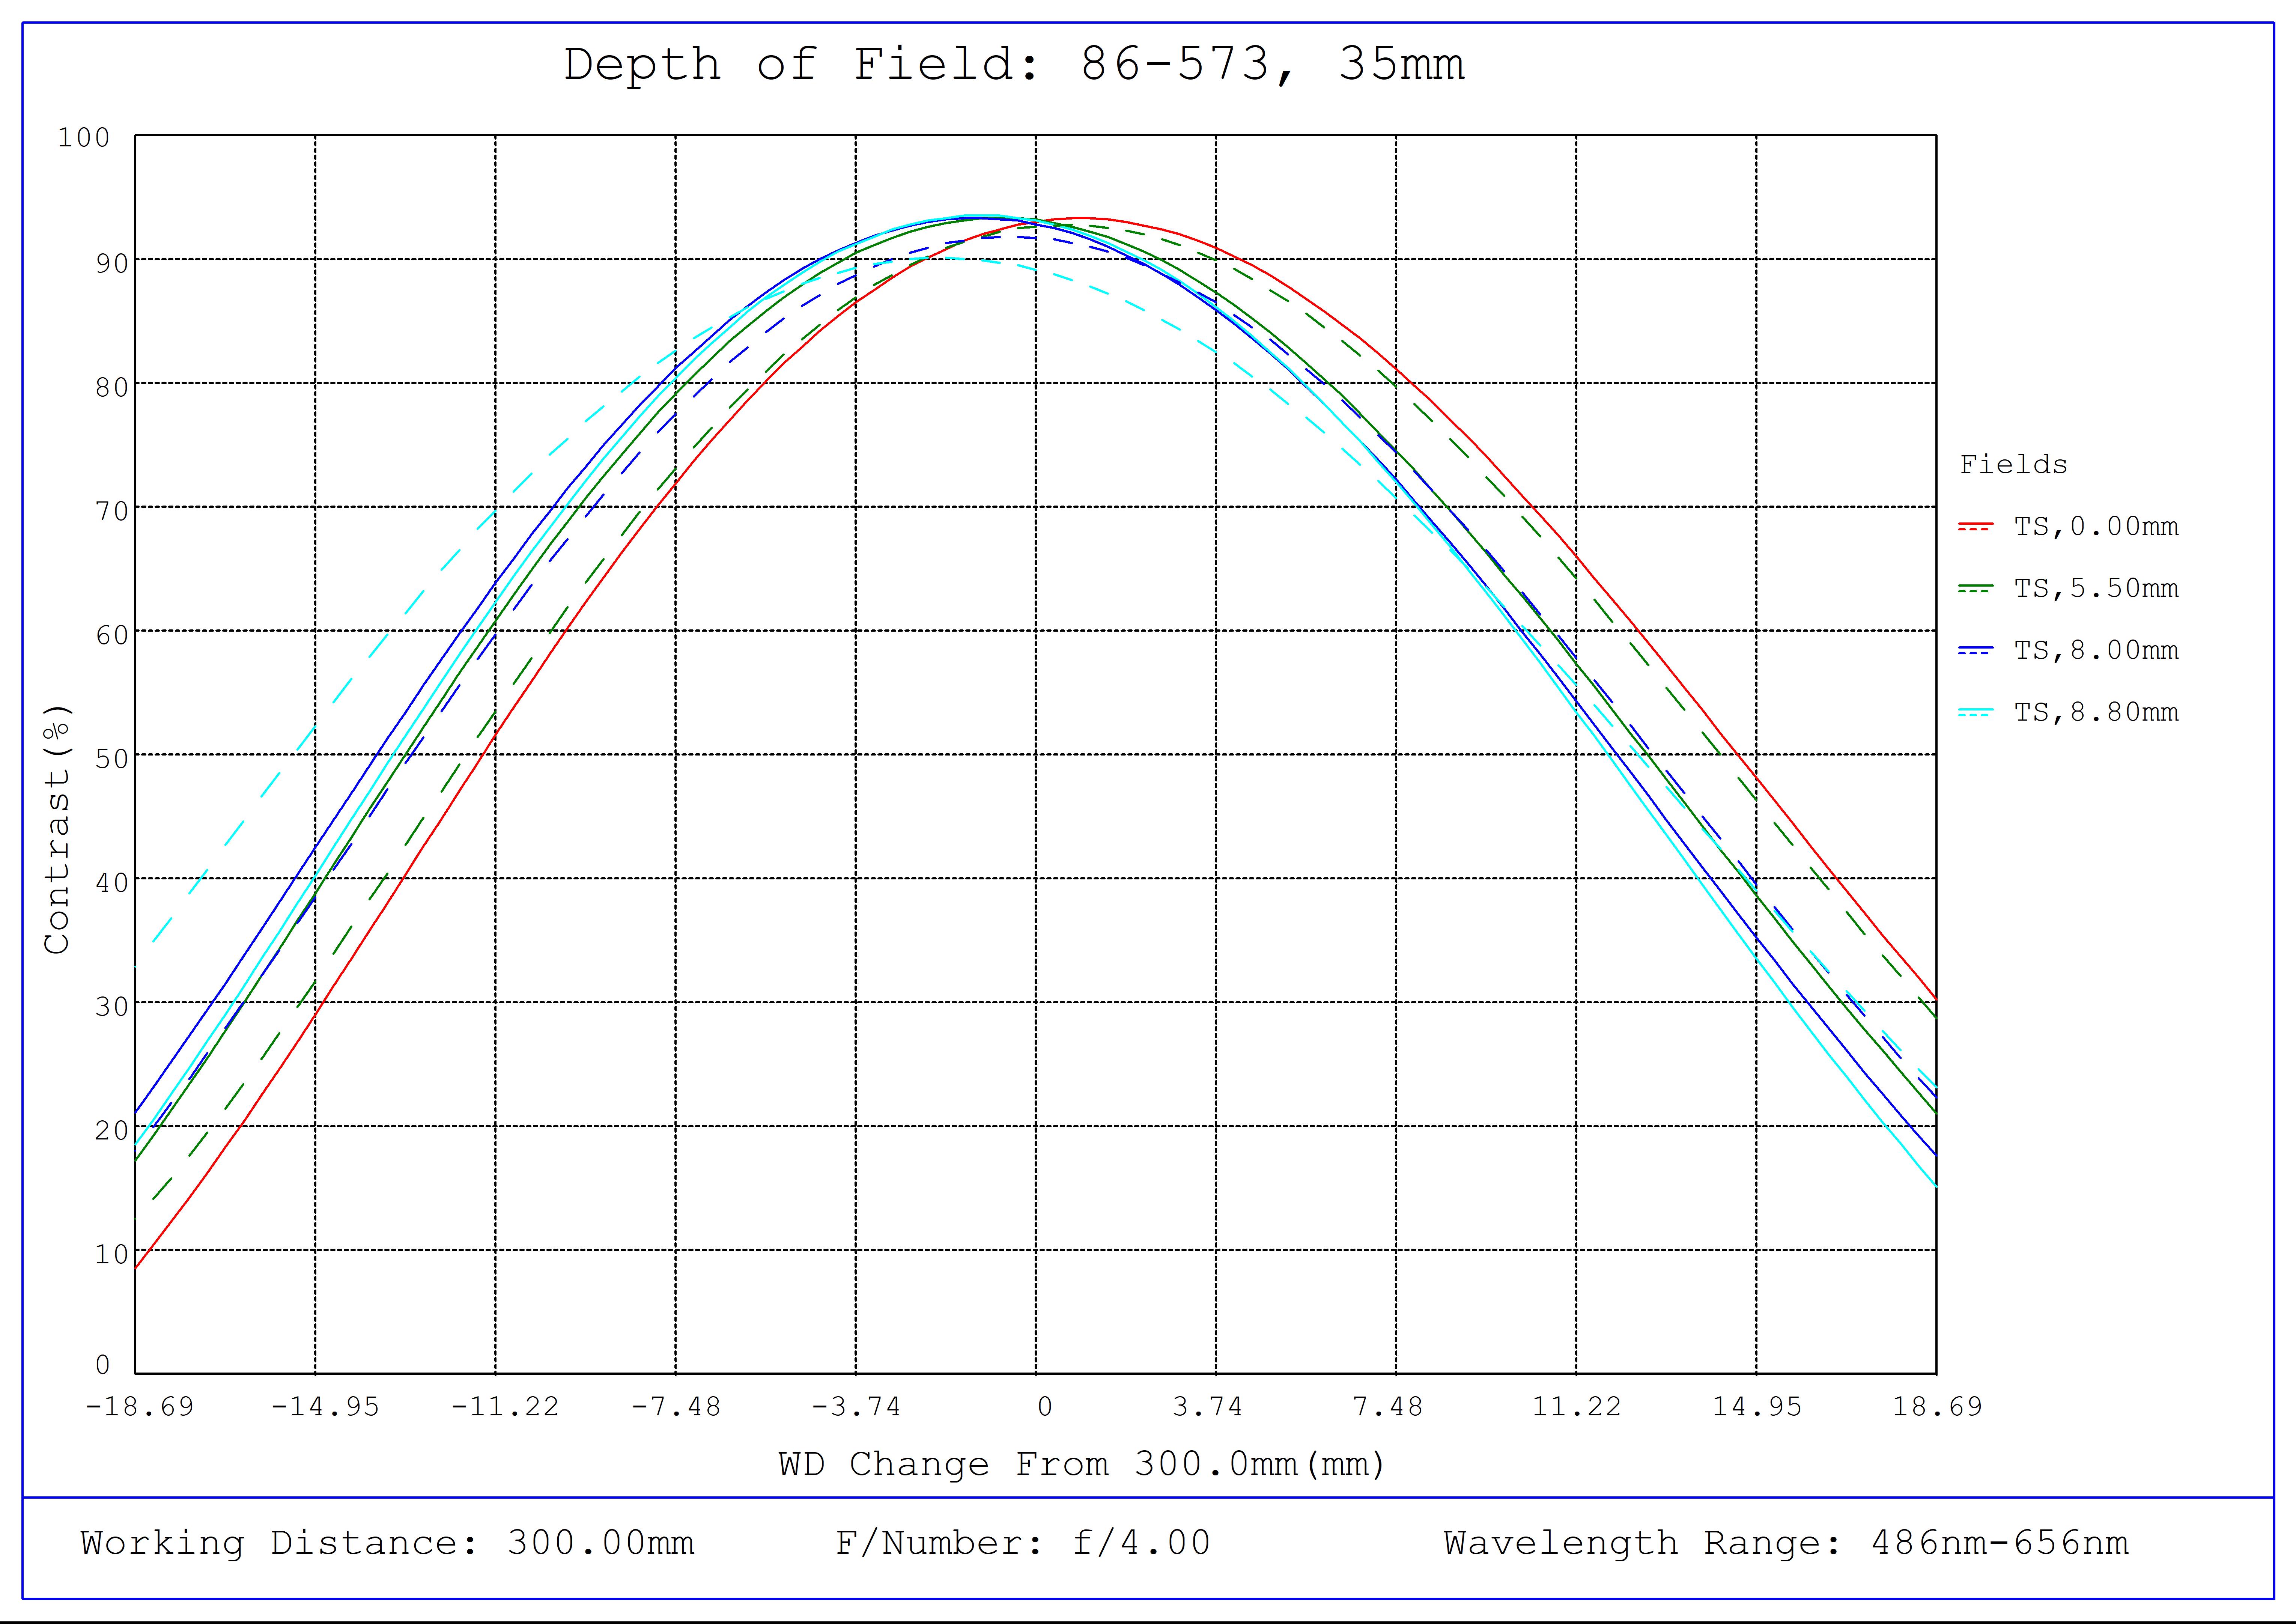 #86-573, 35mm Focal Length, HP Series Fixed Focal Length Lens, Depth of Field Plot, 300mm Working Distance, f4